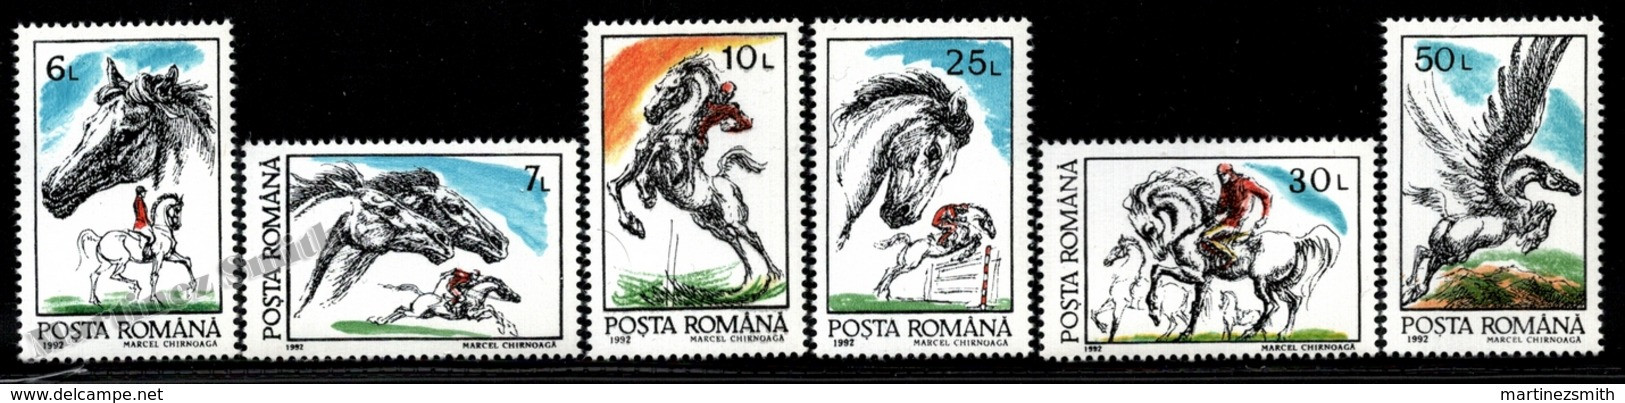 Romania - Roumanie 1992 Yvert 3997-4002, Fauna, Horses - MNH - Neufs